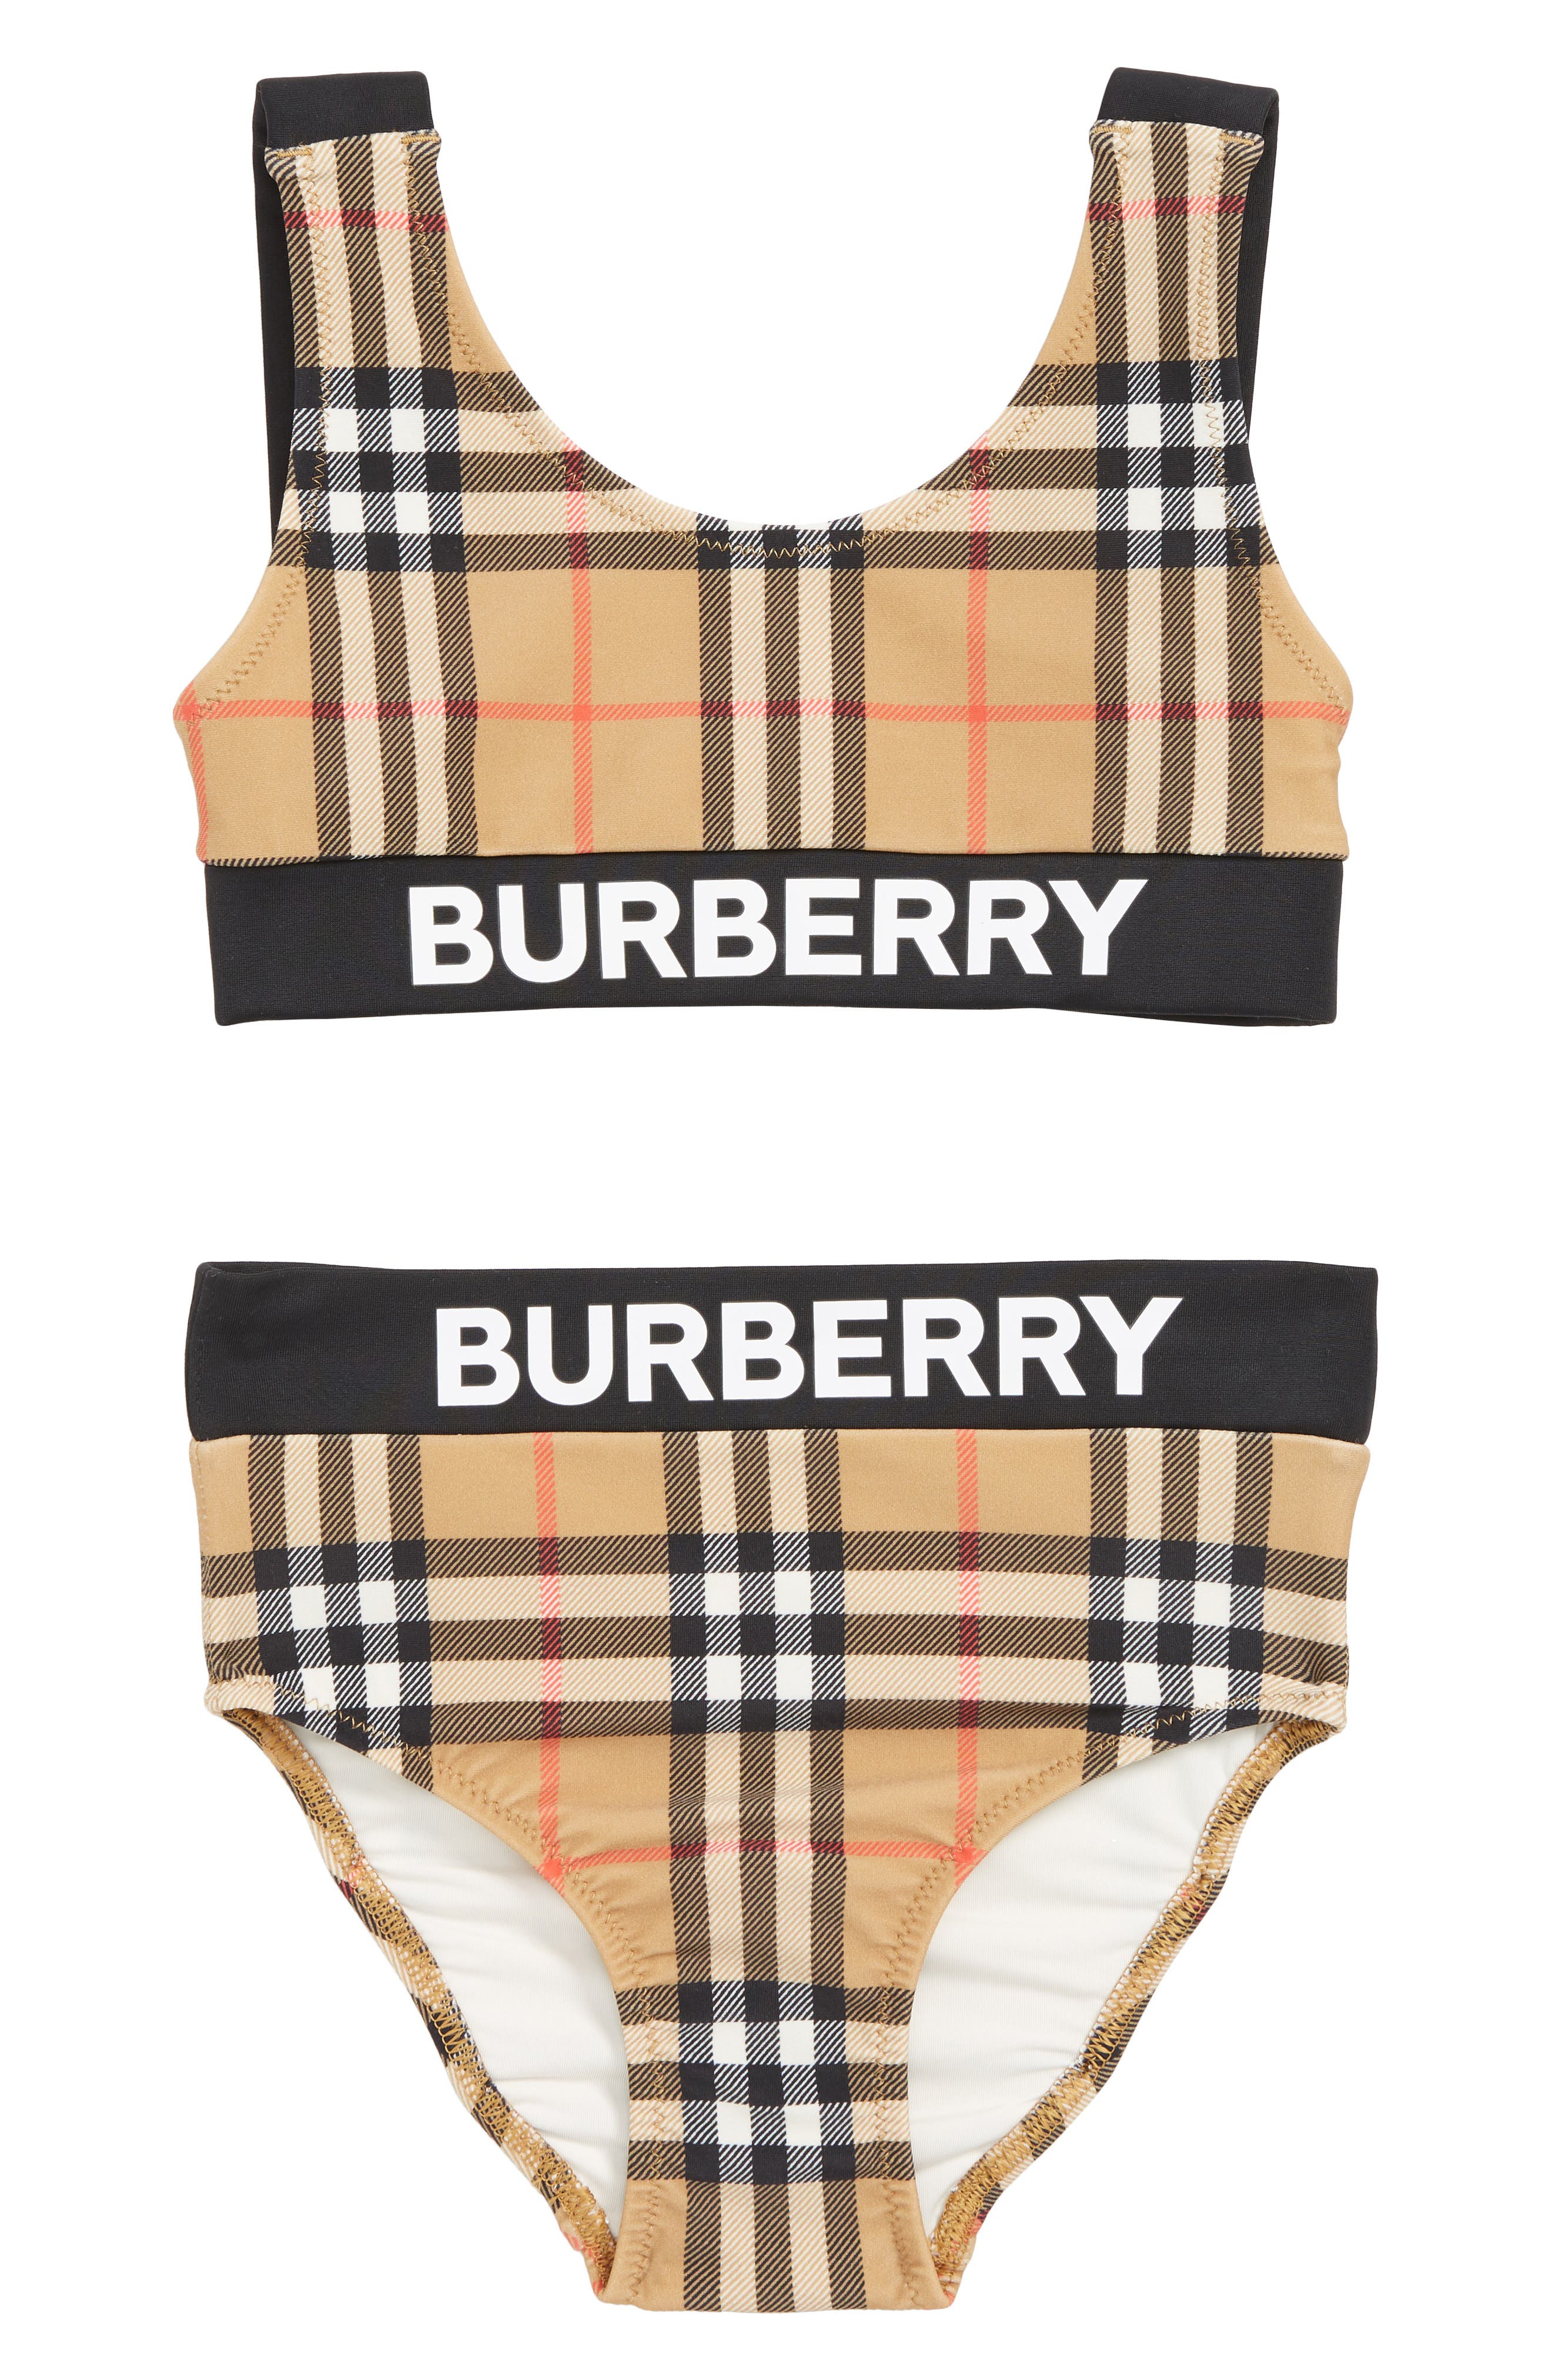 burberry bathing suit